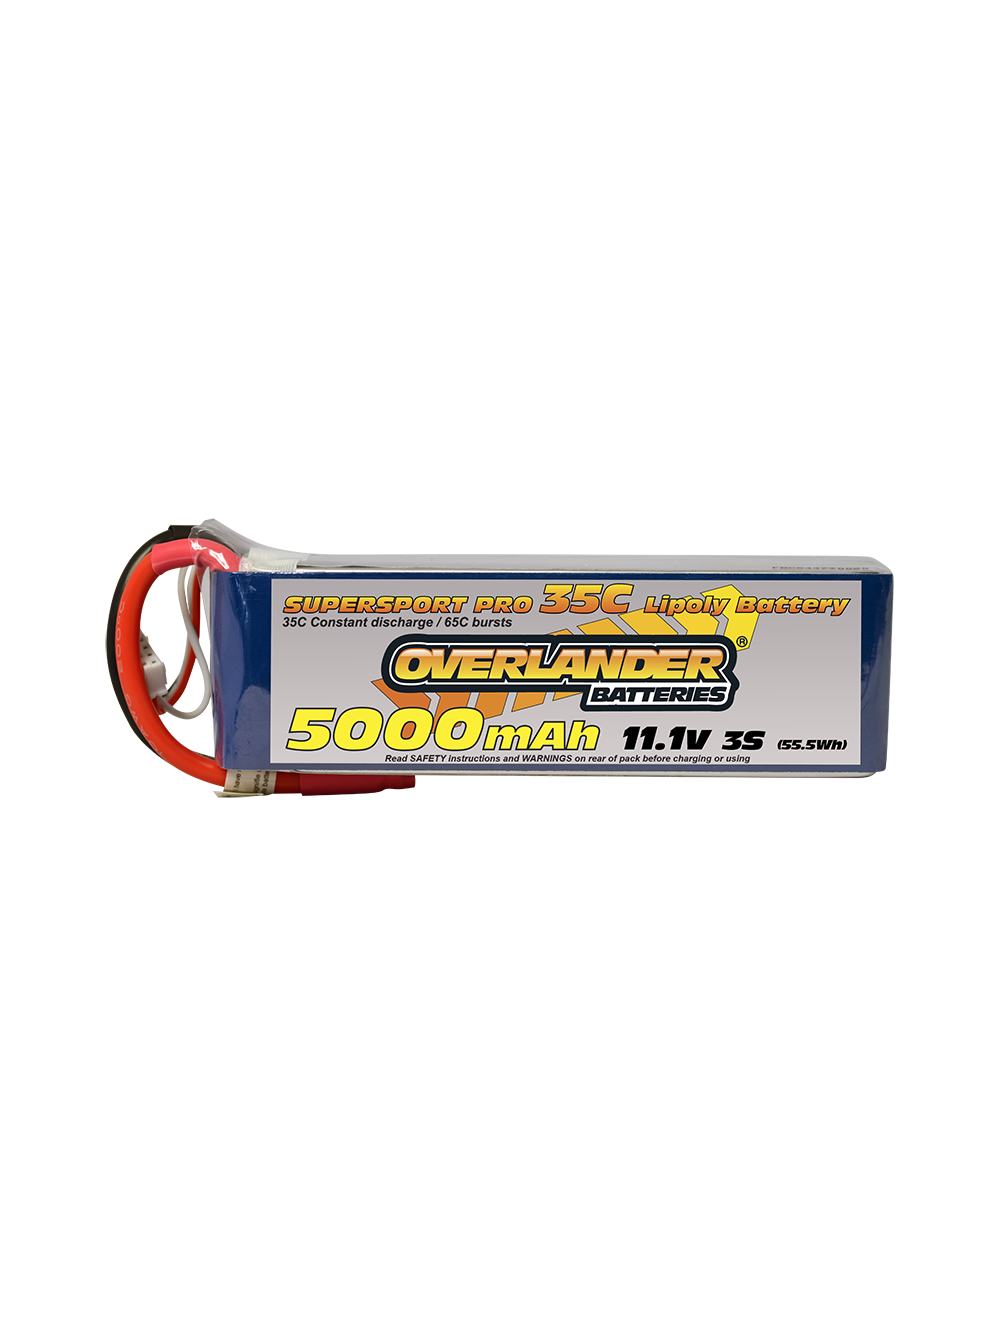 Overlander 5000MAH 11.1V 3S 35C SUPERSPORT PRO LIPO BATTERY